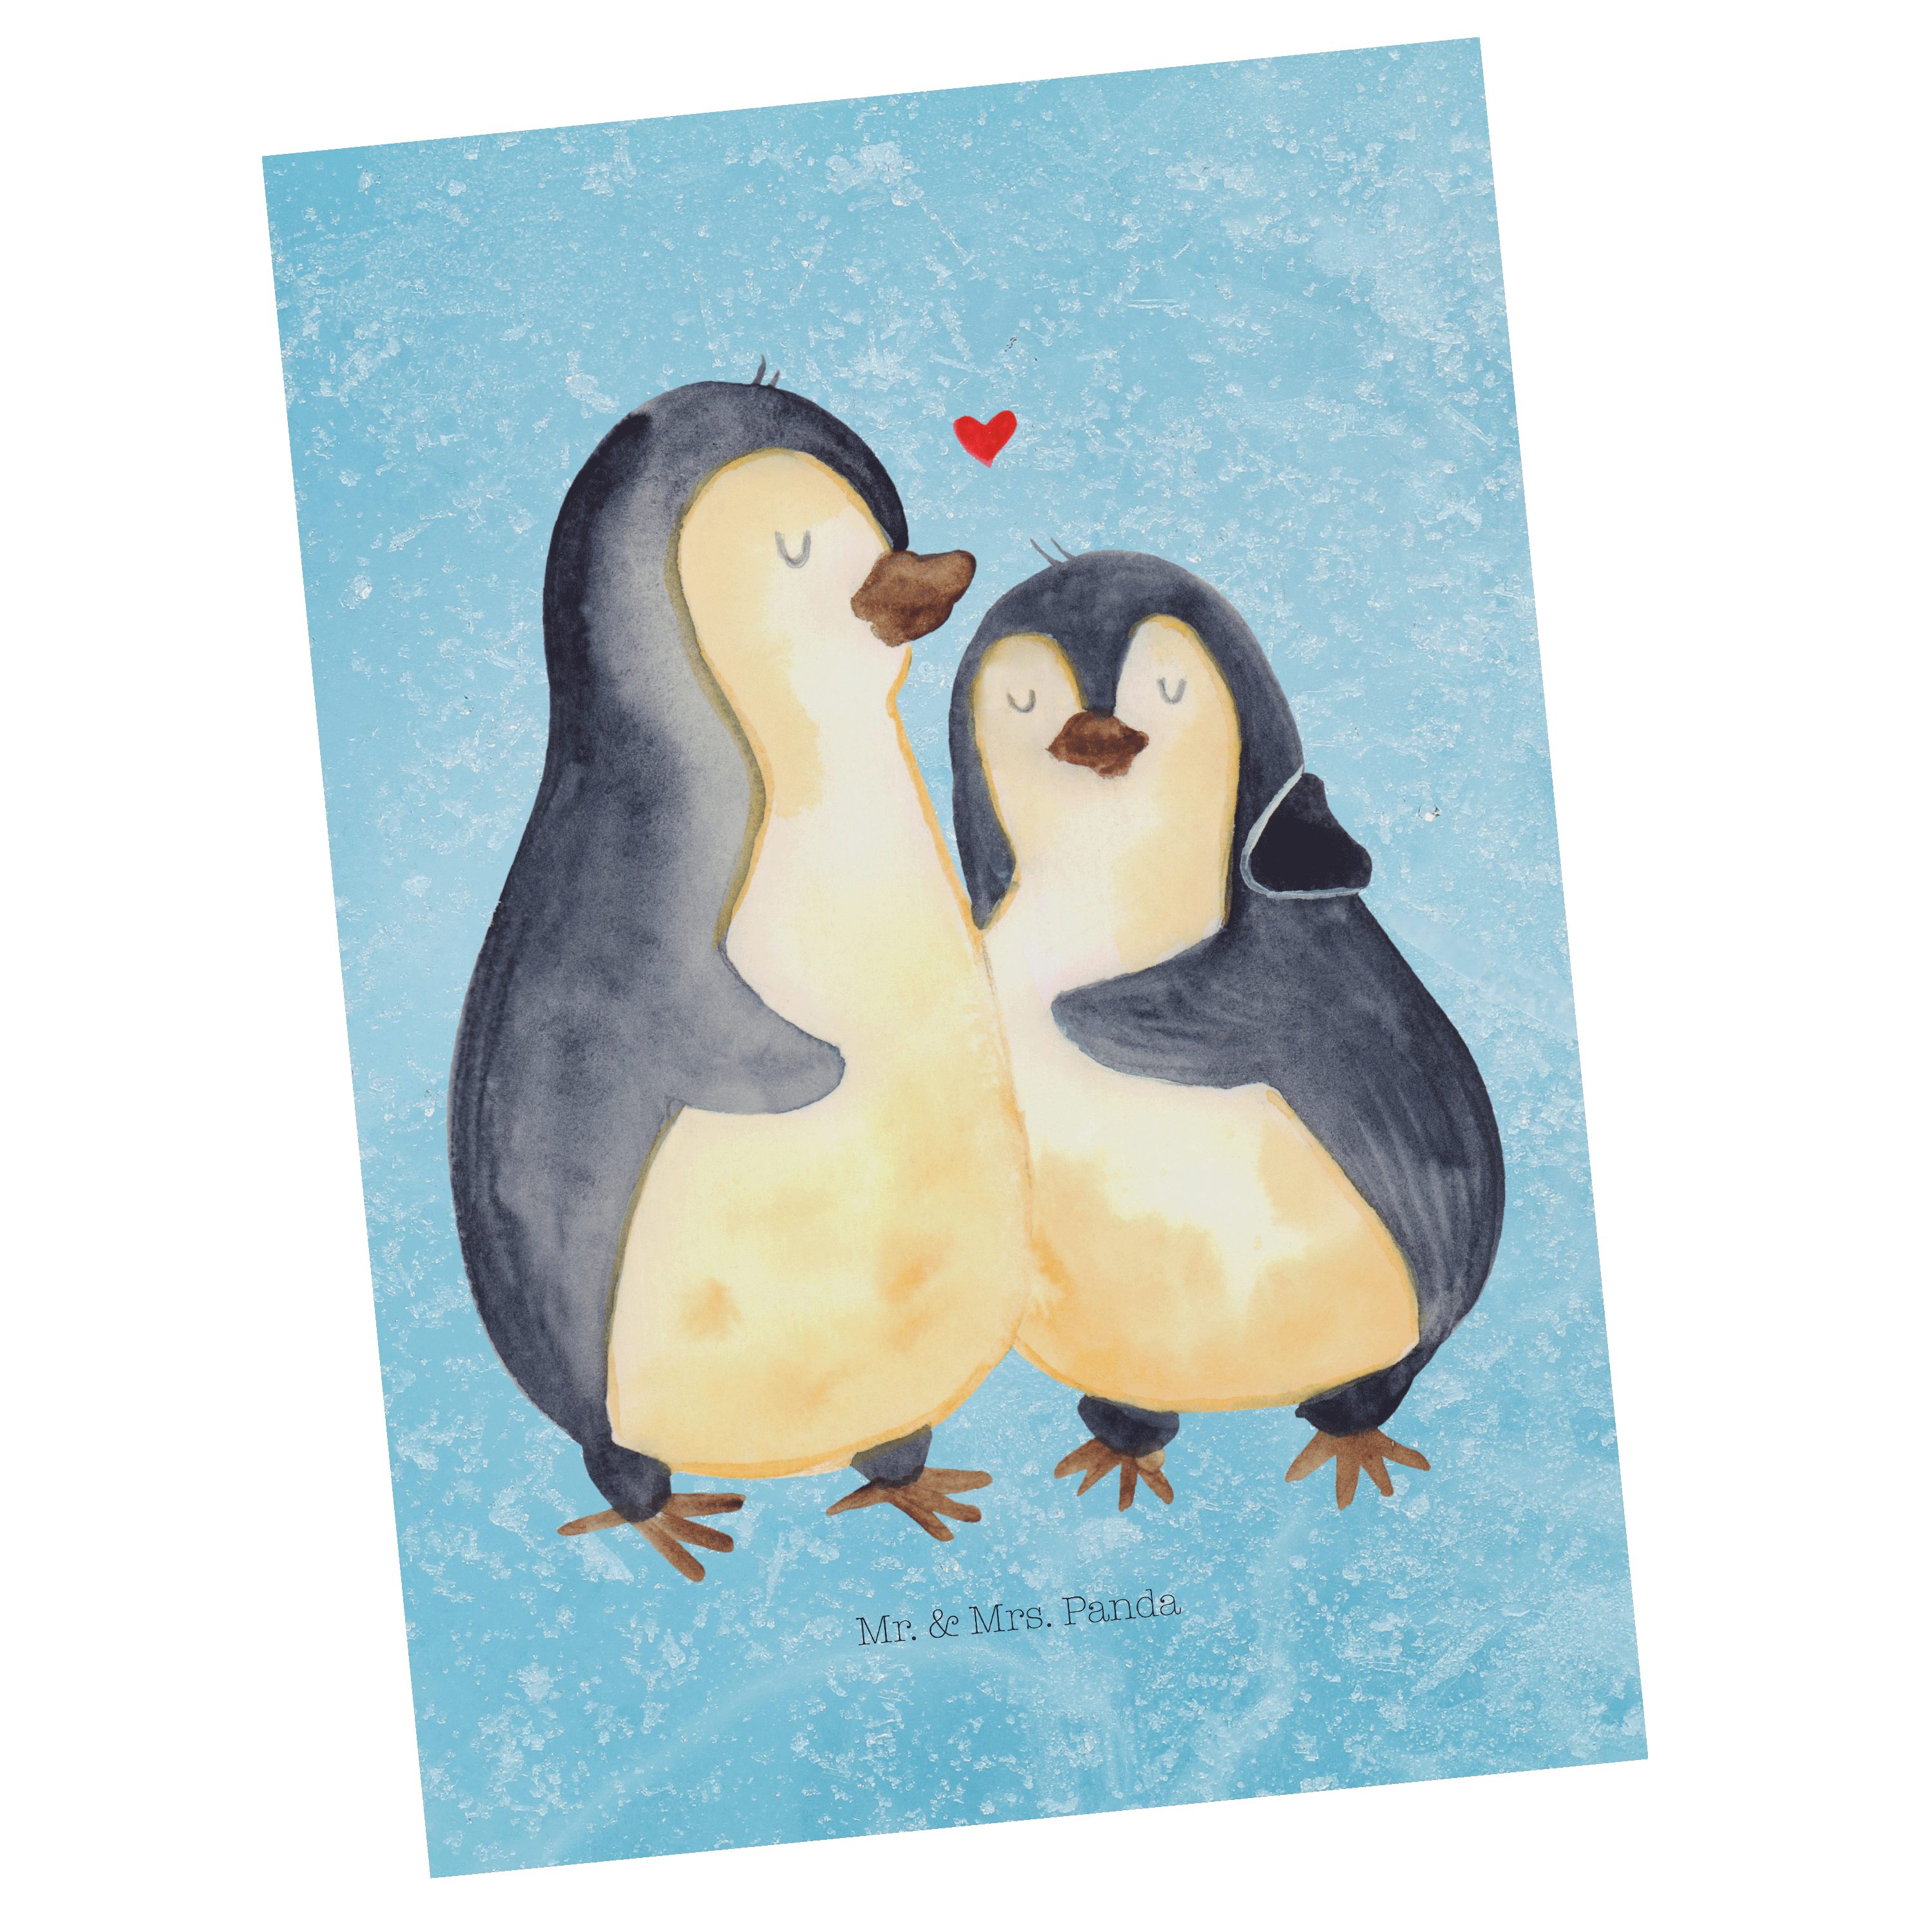 Mr. & Mrs. Panda Postkarte Pinguin umarmen - Eisblau - Geschenk, Ansichtskarte, Postkarte, Grußk, Matt Rückseite